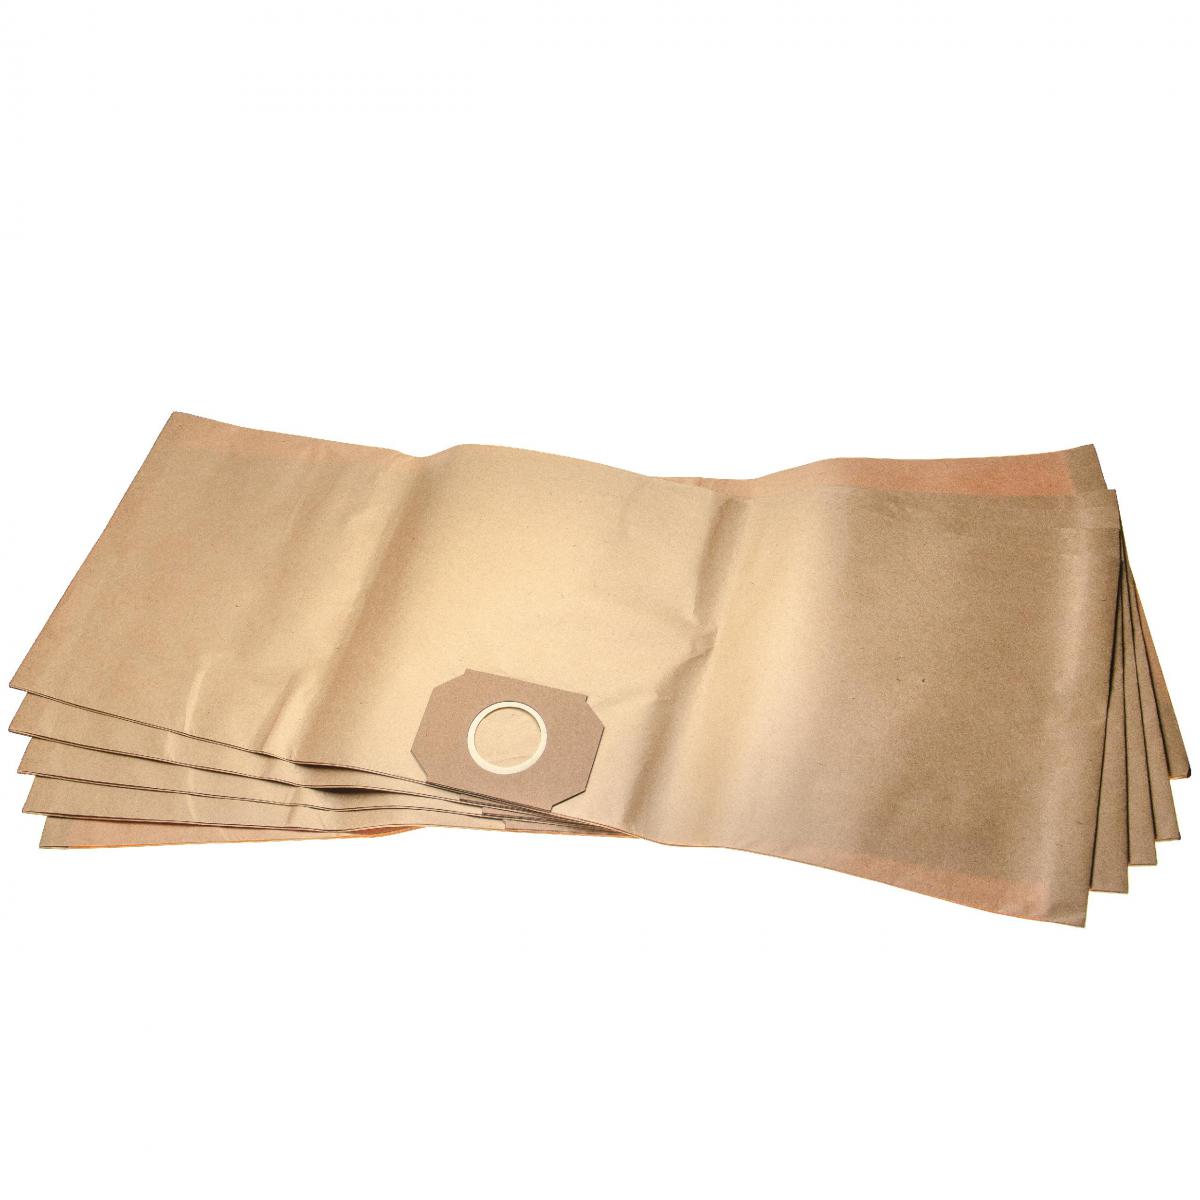 Vhbw - vhbw 10 sacs papier compatible avec Thomas INOX 1530, 1030 E, 1235 Silverstar, 826 SD, 826 SDE aspirateur 32cm x 90cm - Cordons d'alimentation